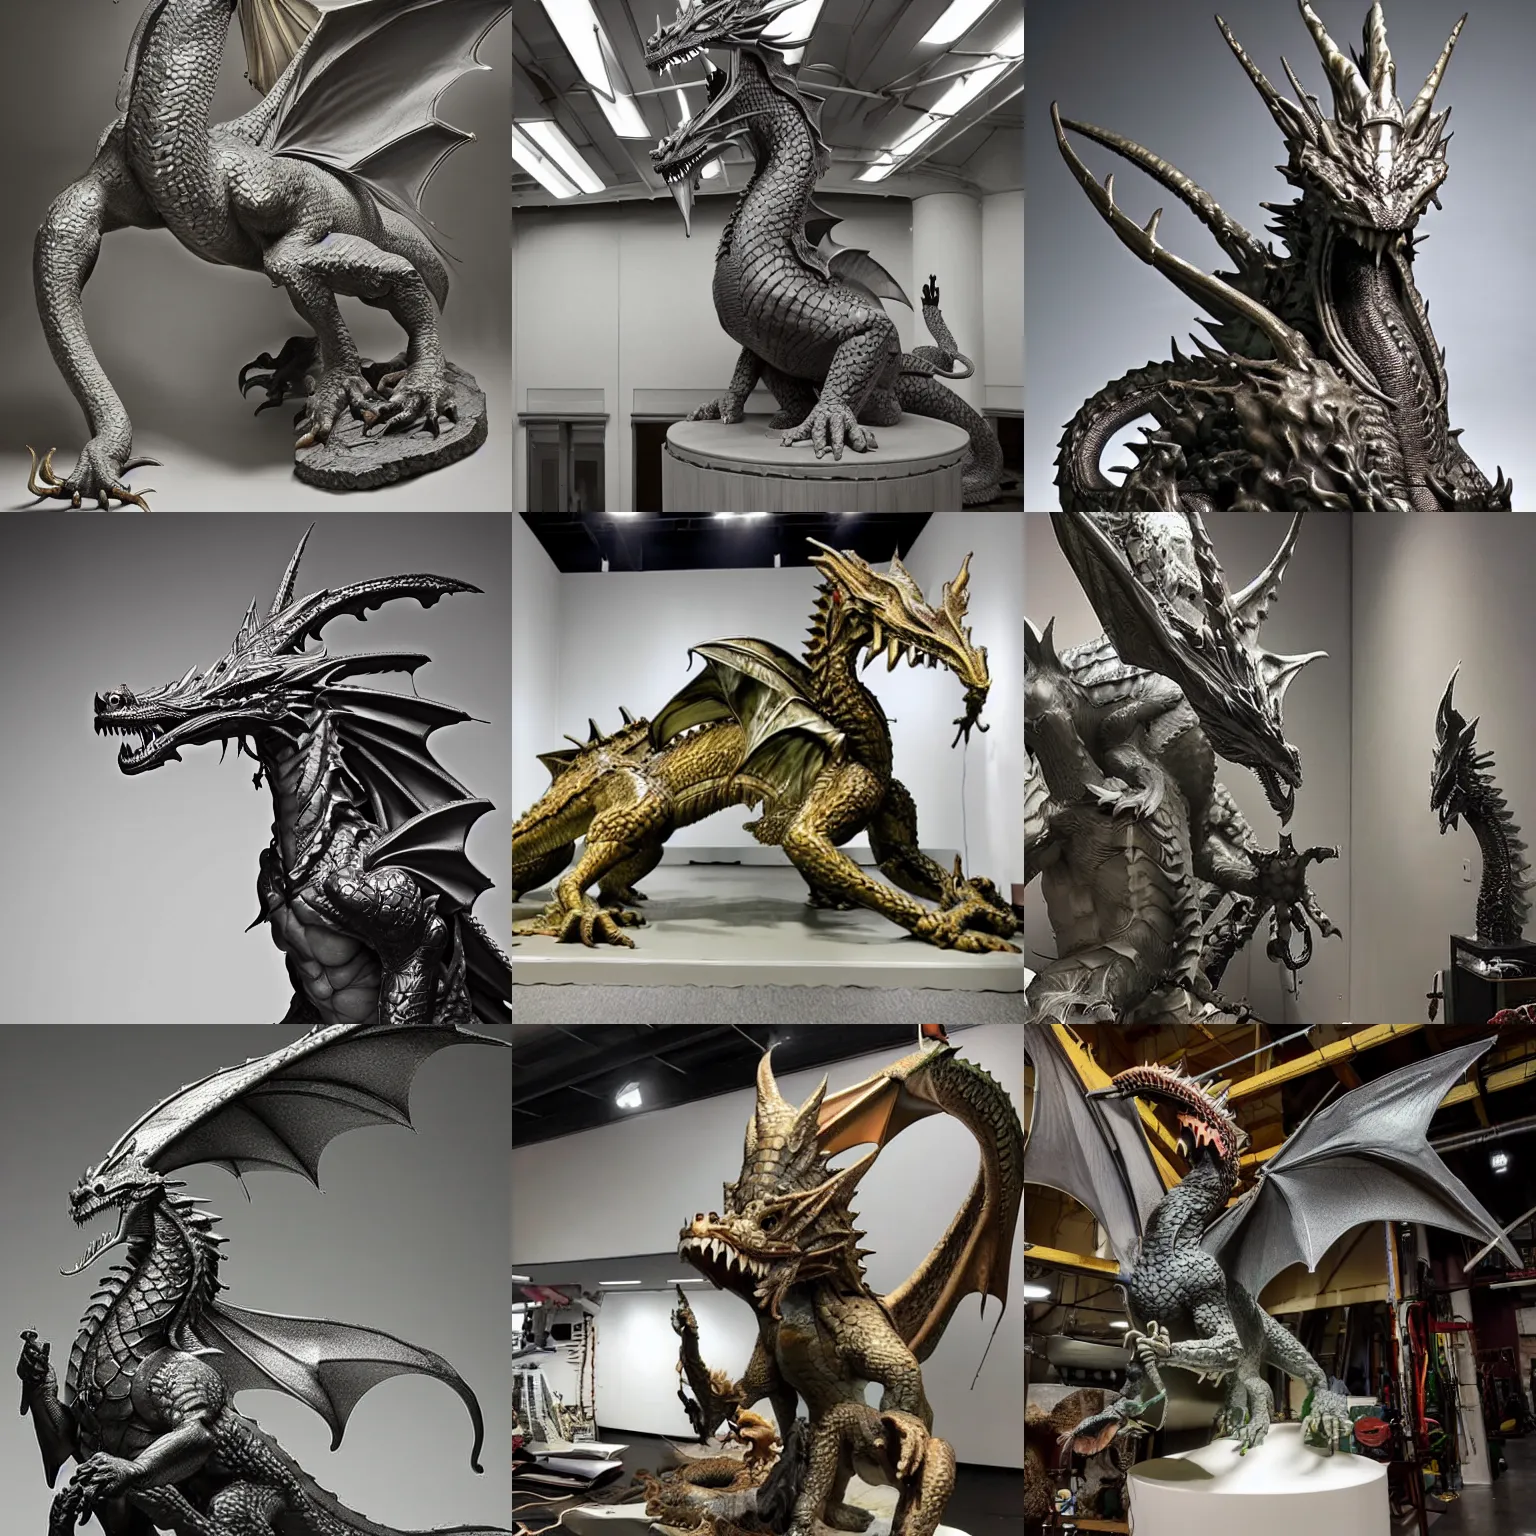 Prompt: a studio photo of a dragon statue designed by yoshitaka amano